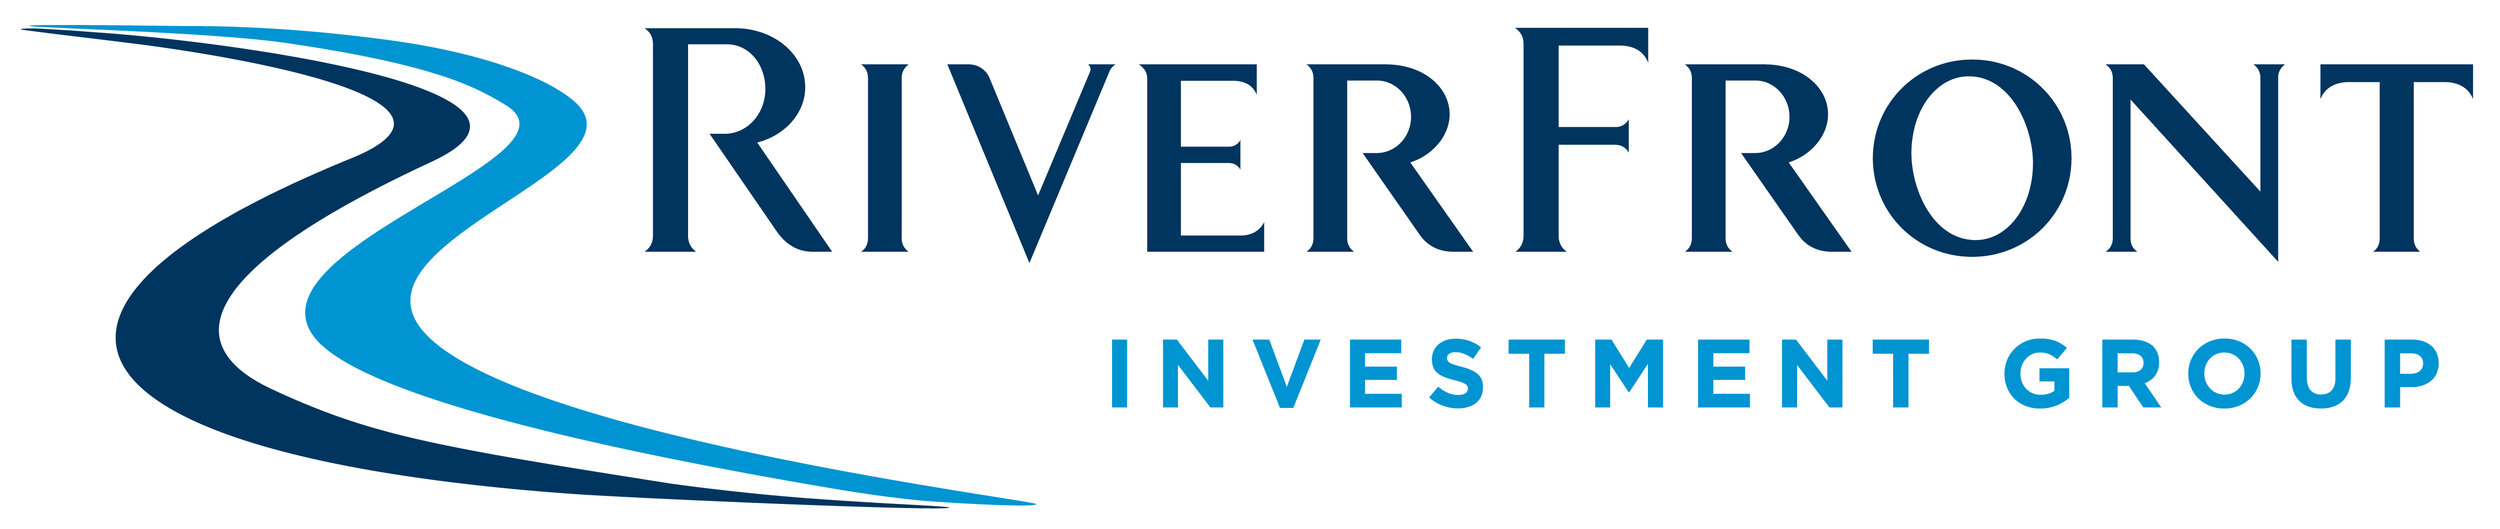 Riverfront logo.jpg